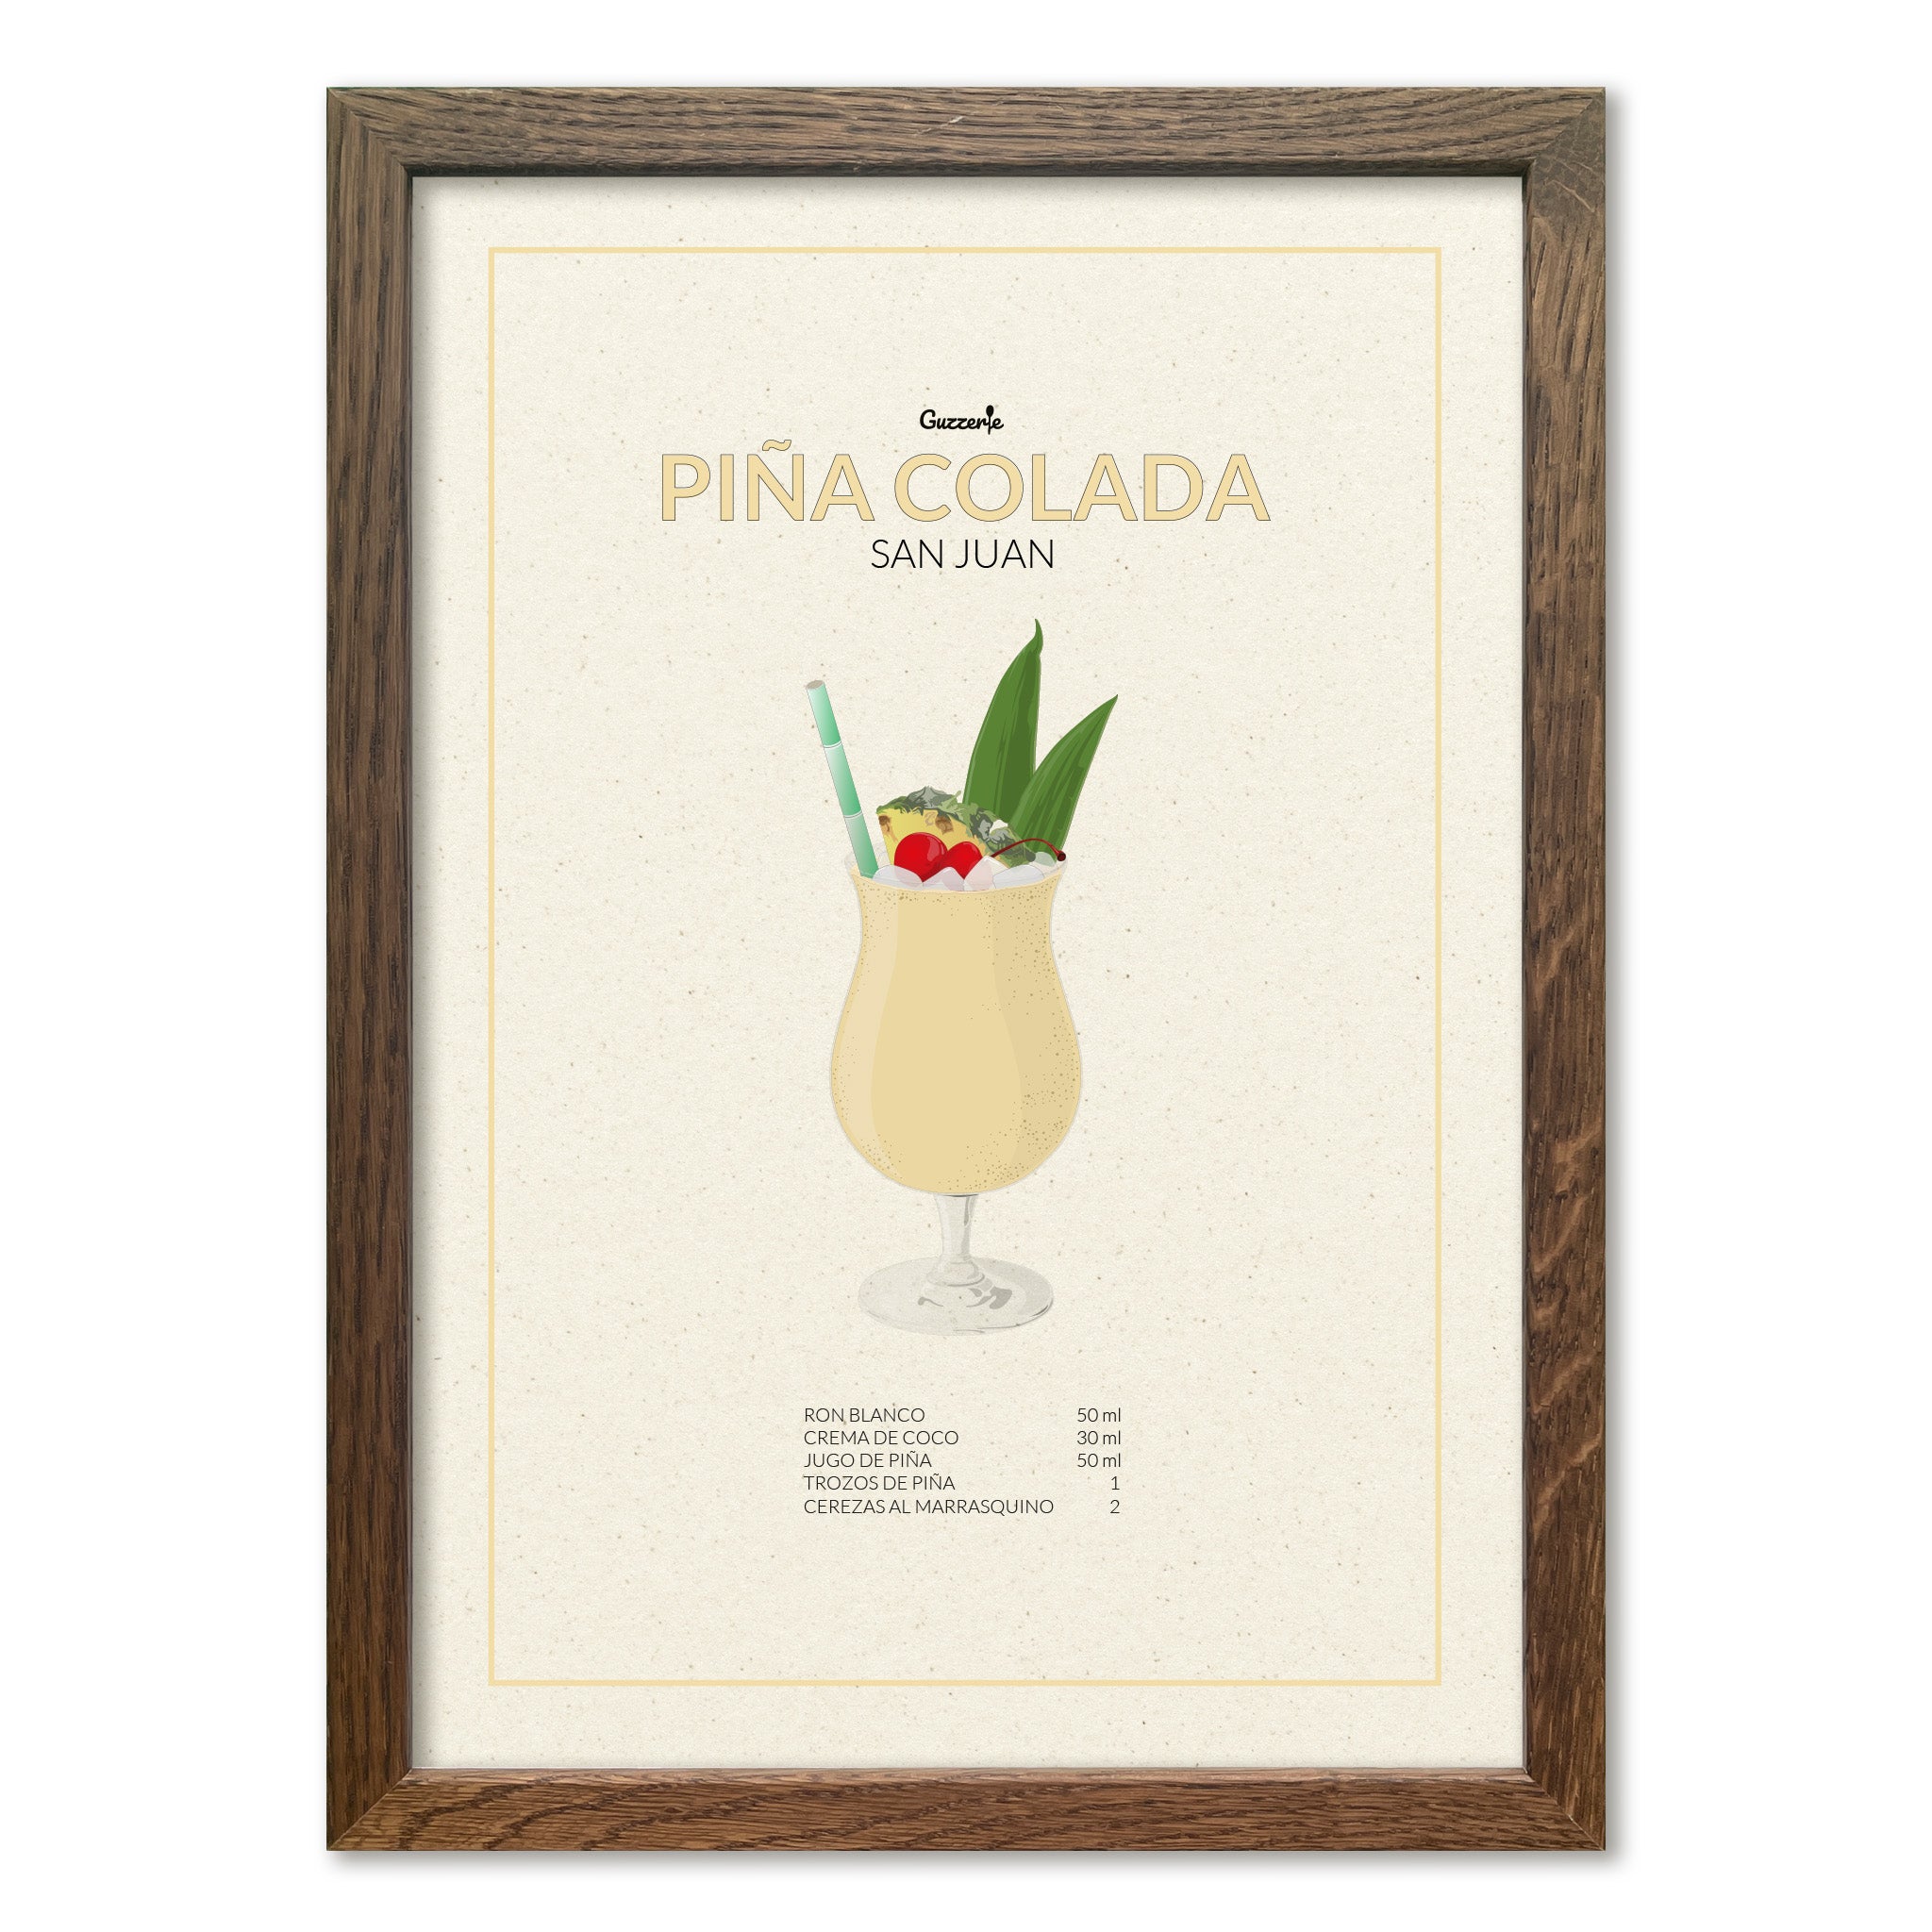 Iconic Poster of Piña Colada Cocktail | Guzzerie